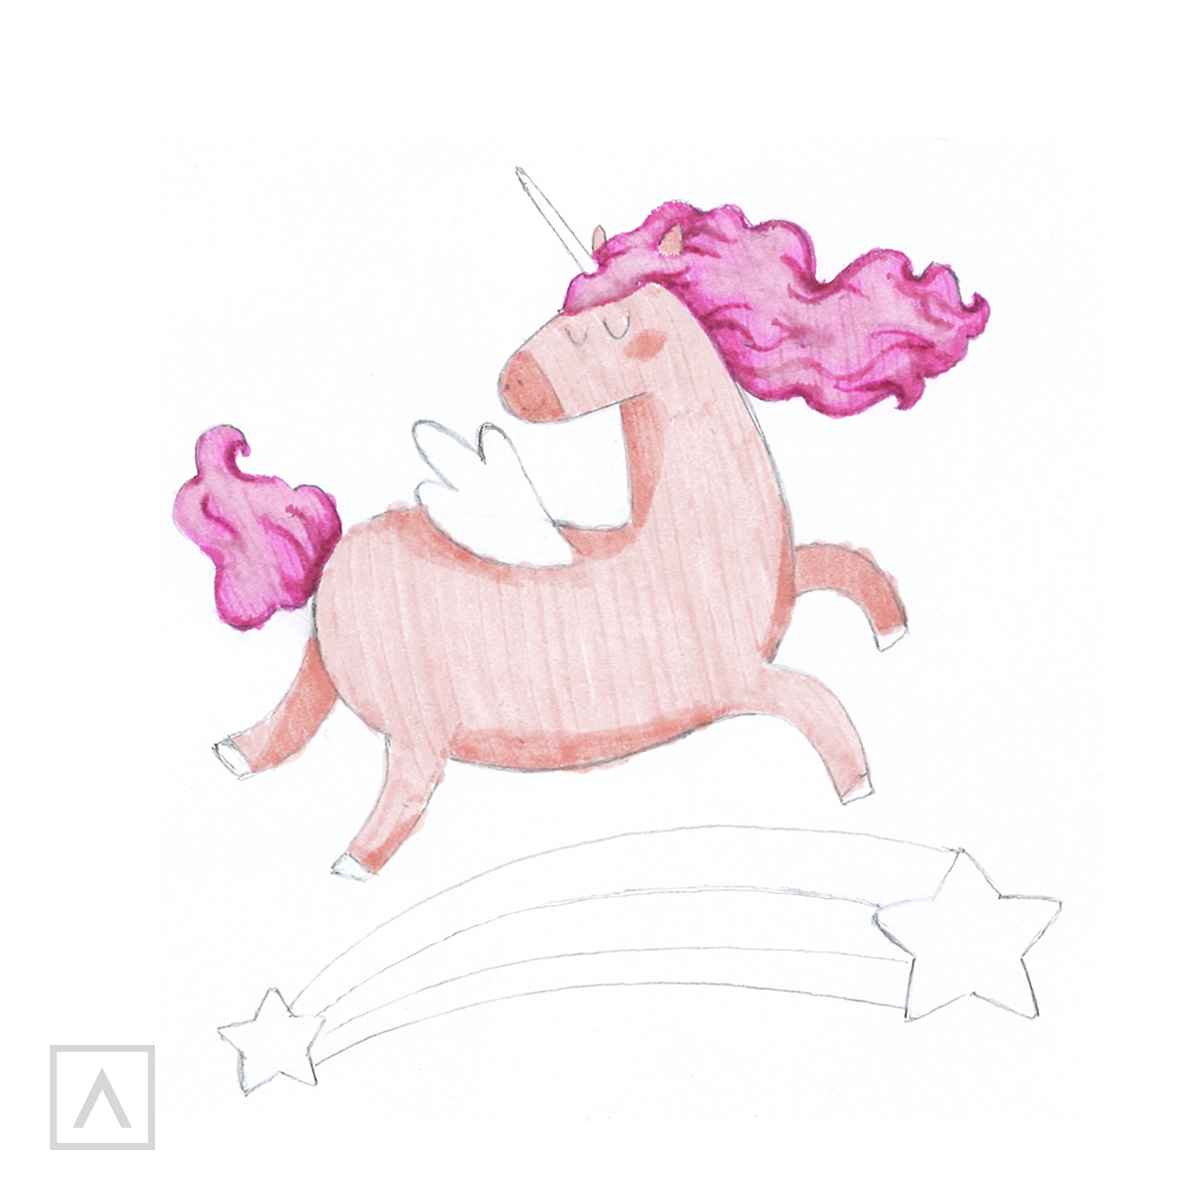 How to Draw a Unicorn - Step 7